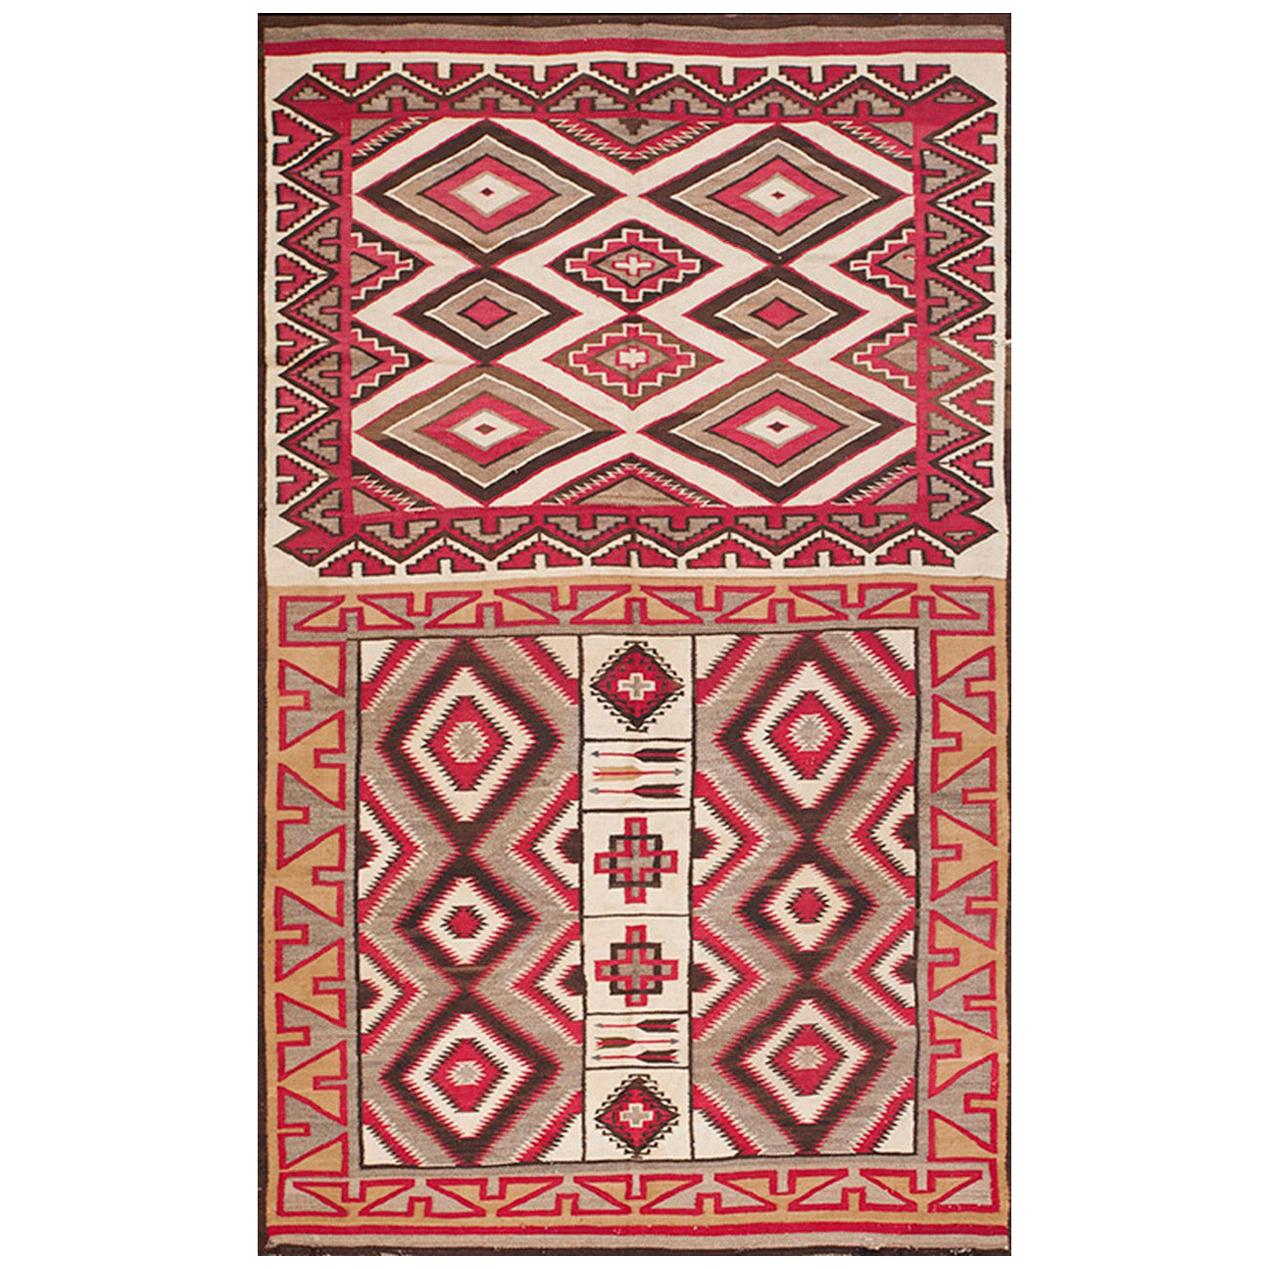 Early 20th Century American Navajo Carpet ( 4'9" x 7'6" - 145 x 230 )